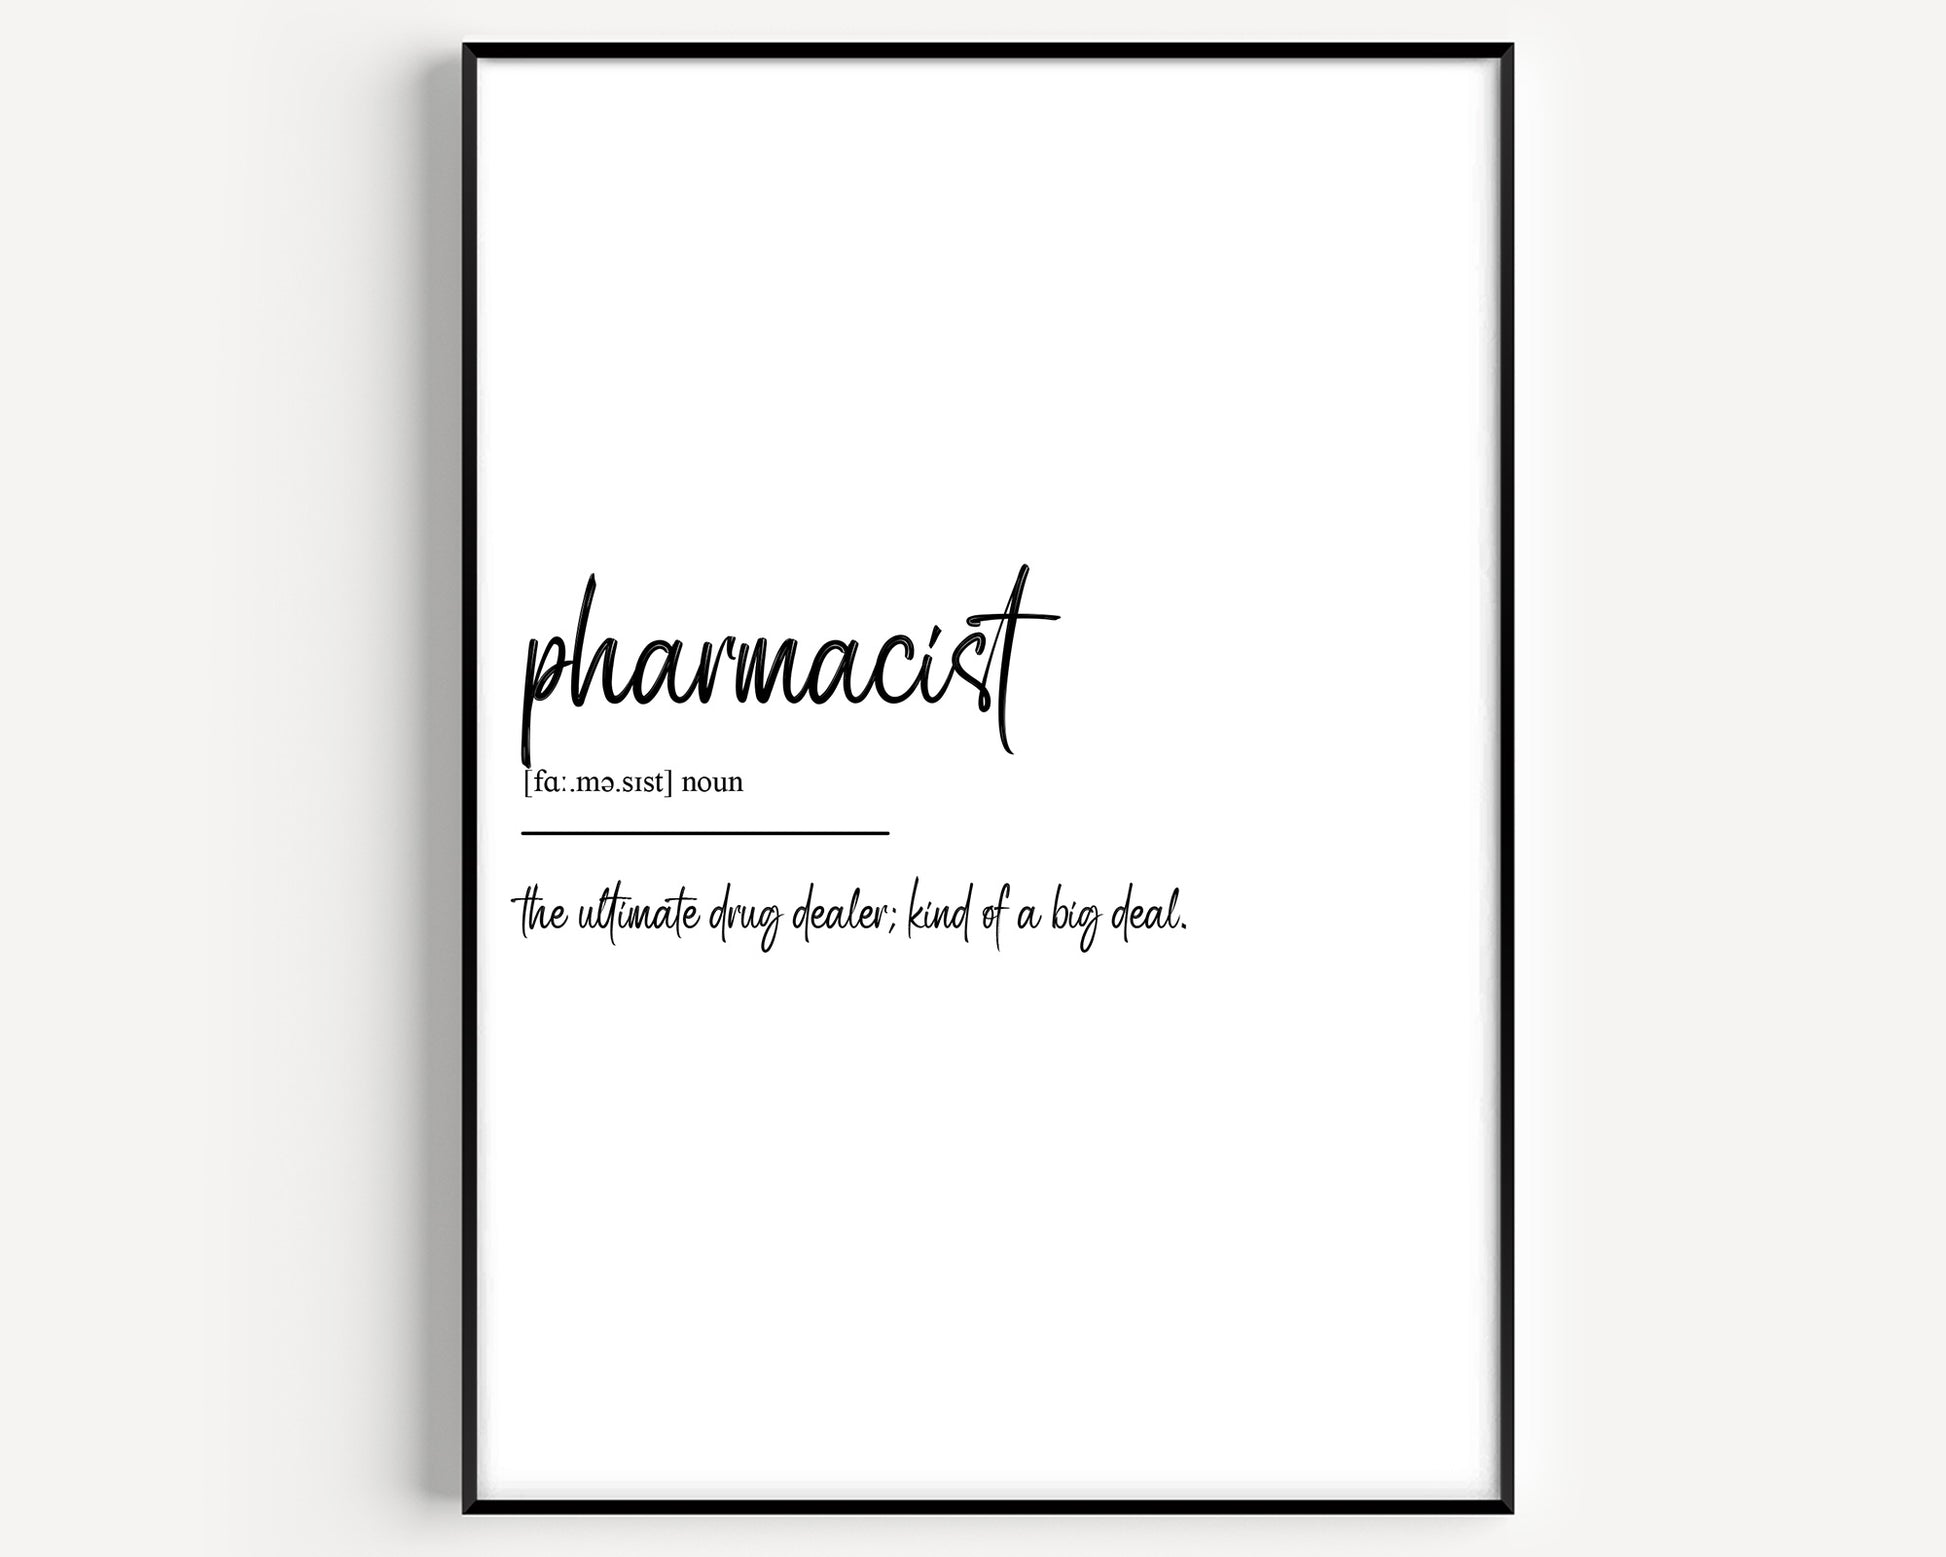 Pharmacist Definition Print - Magic Posters